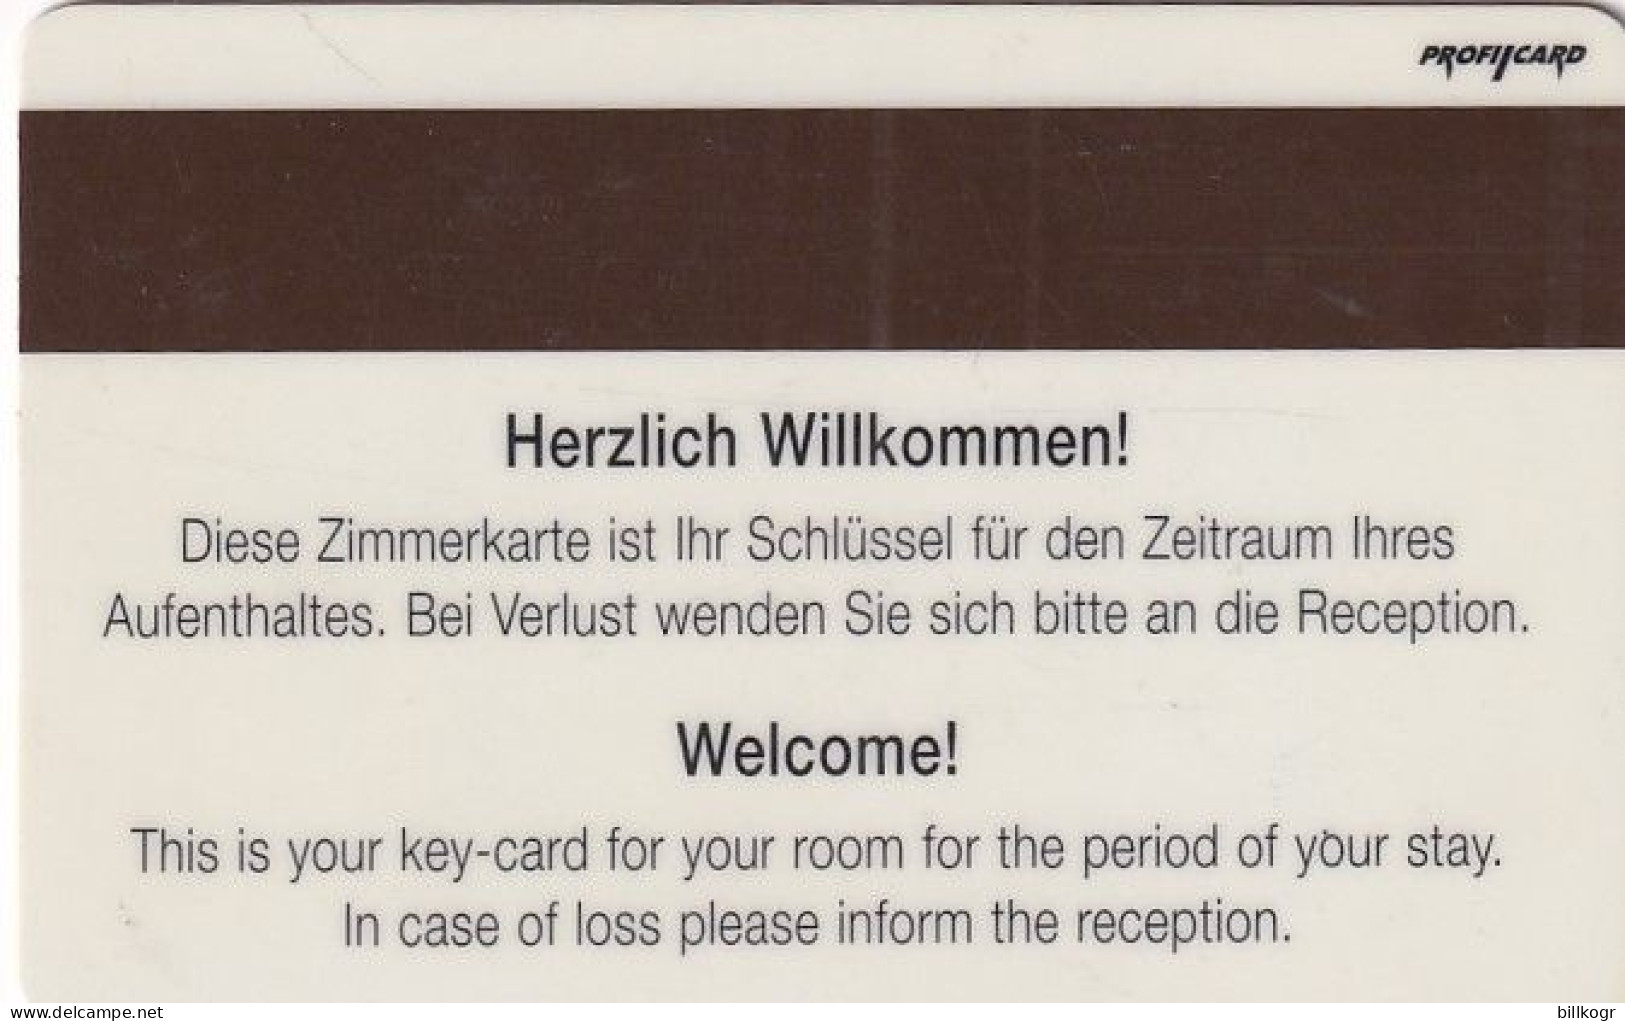 AUSTRIA - Sonne/Activ Sunny Hotel, Hotel Keycard, Used - Hotelkarten